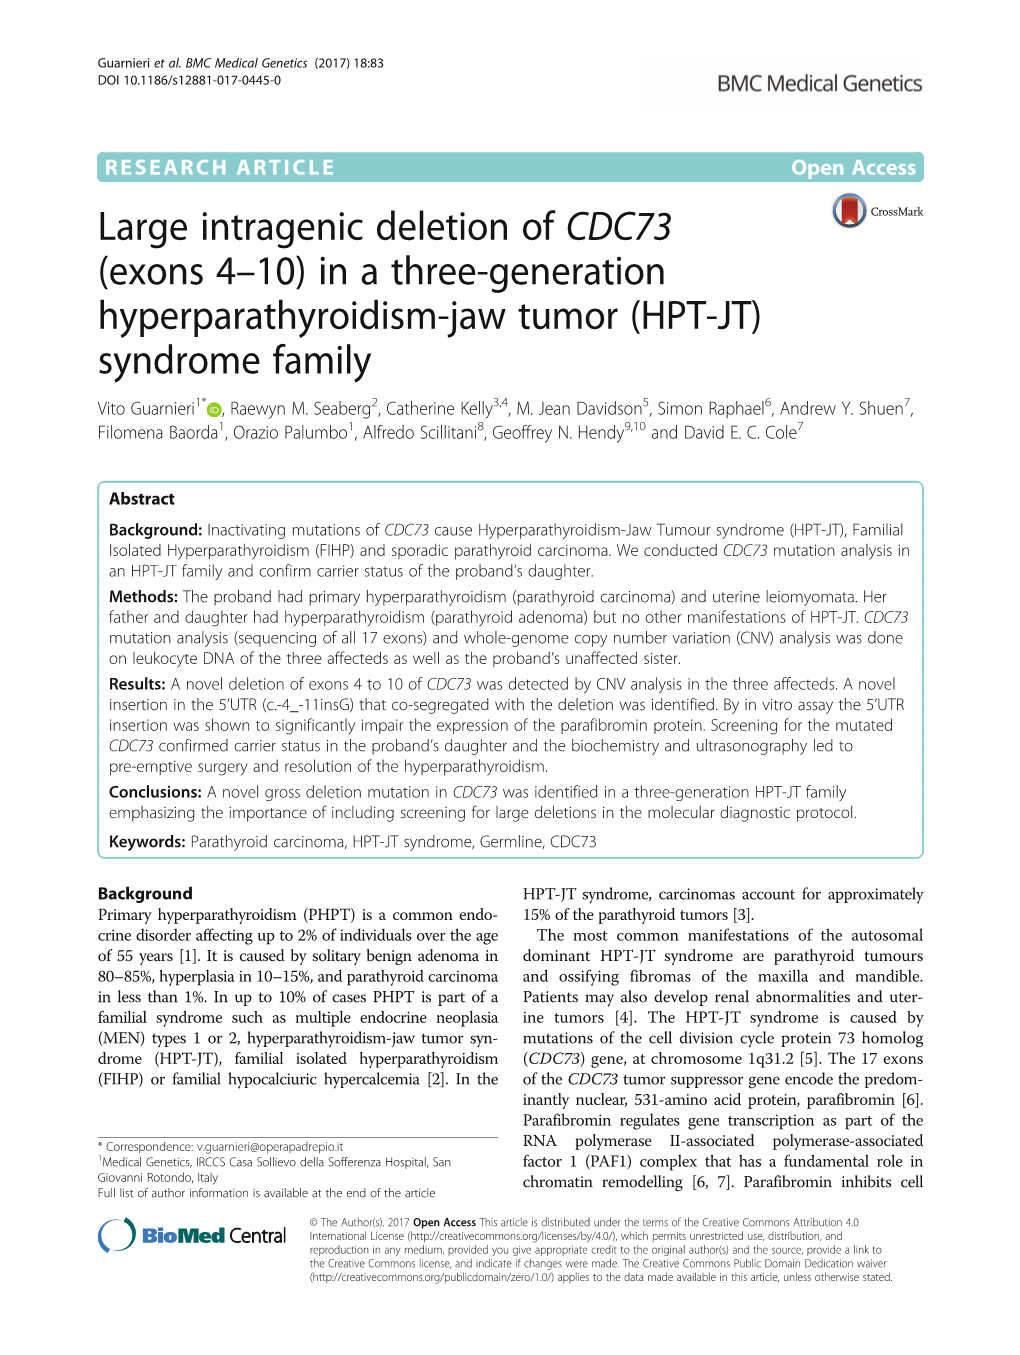 In a Three-Generation Hyperparathyroidism-Jaw Tumor (HPT-JT) Syndrome Family Vito Guarnieri1* , Raewyn M